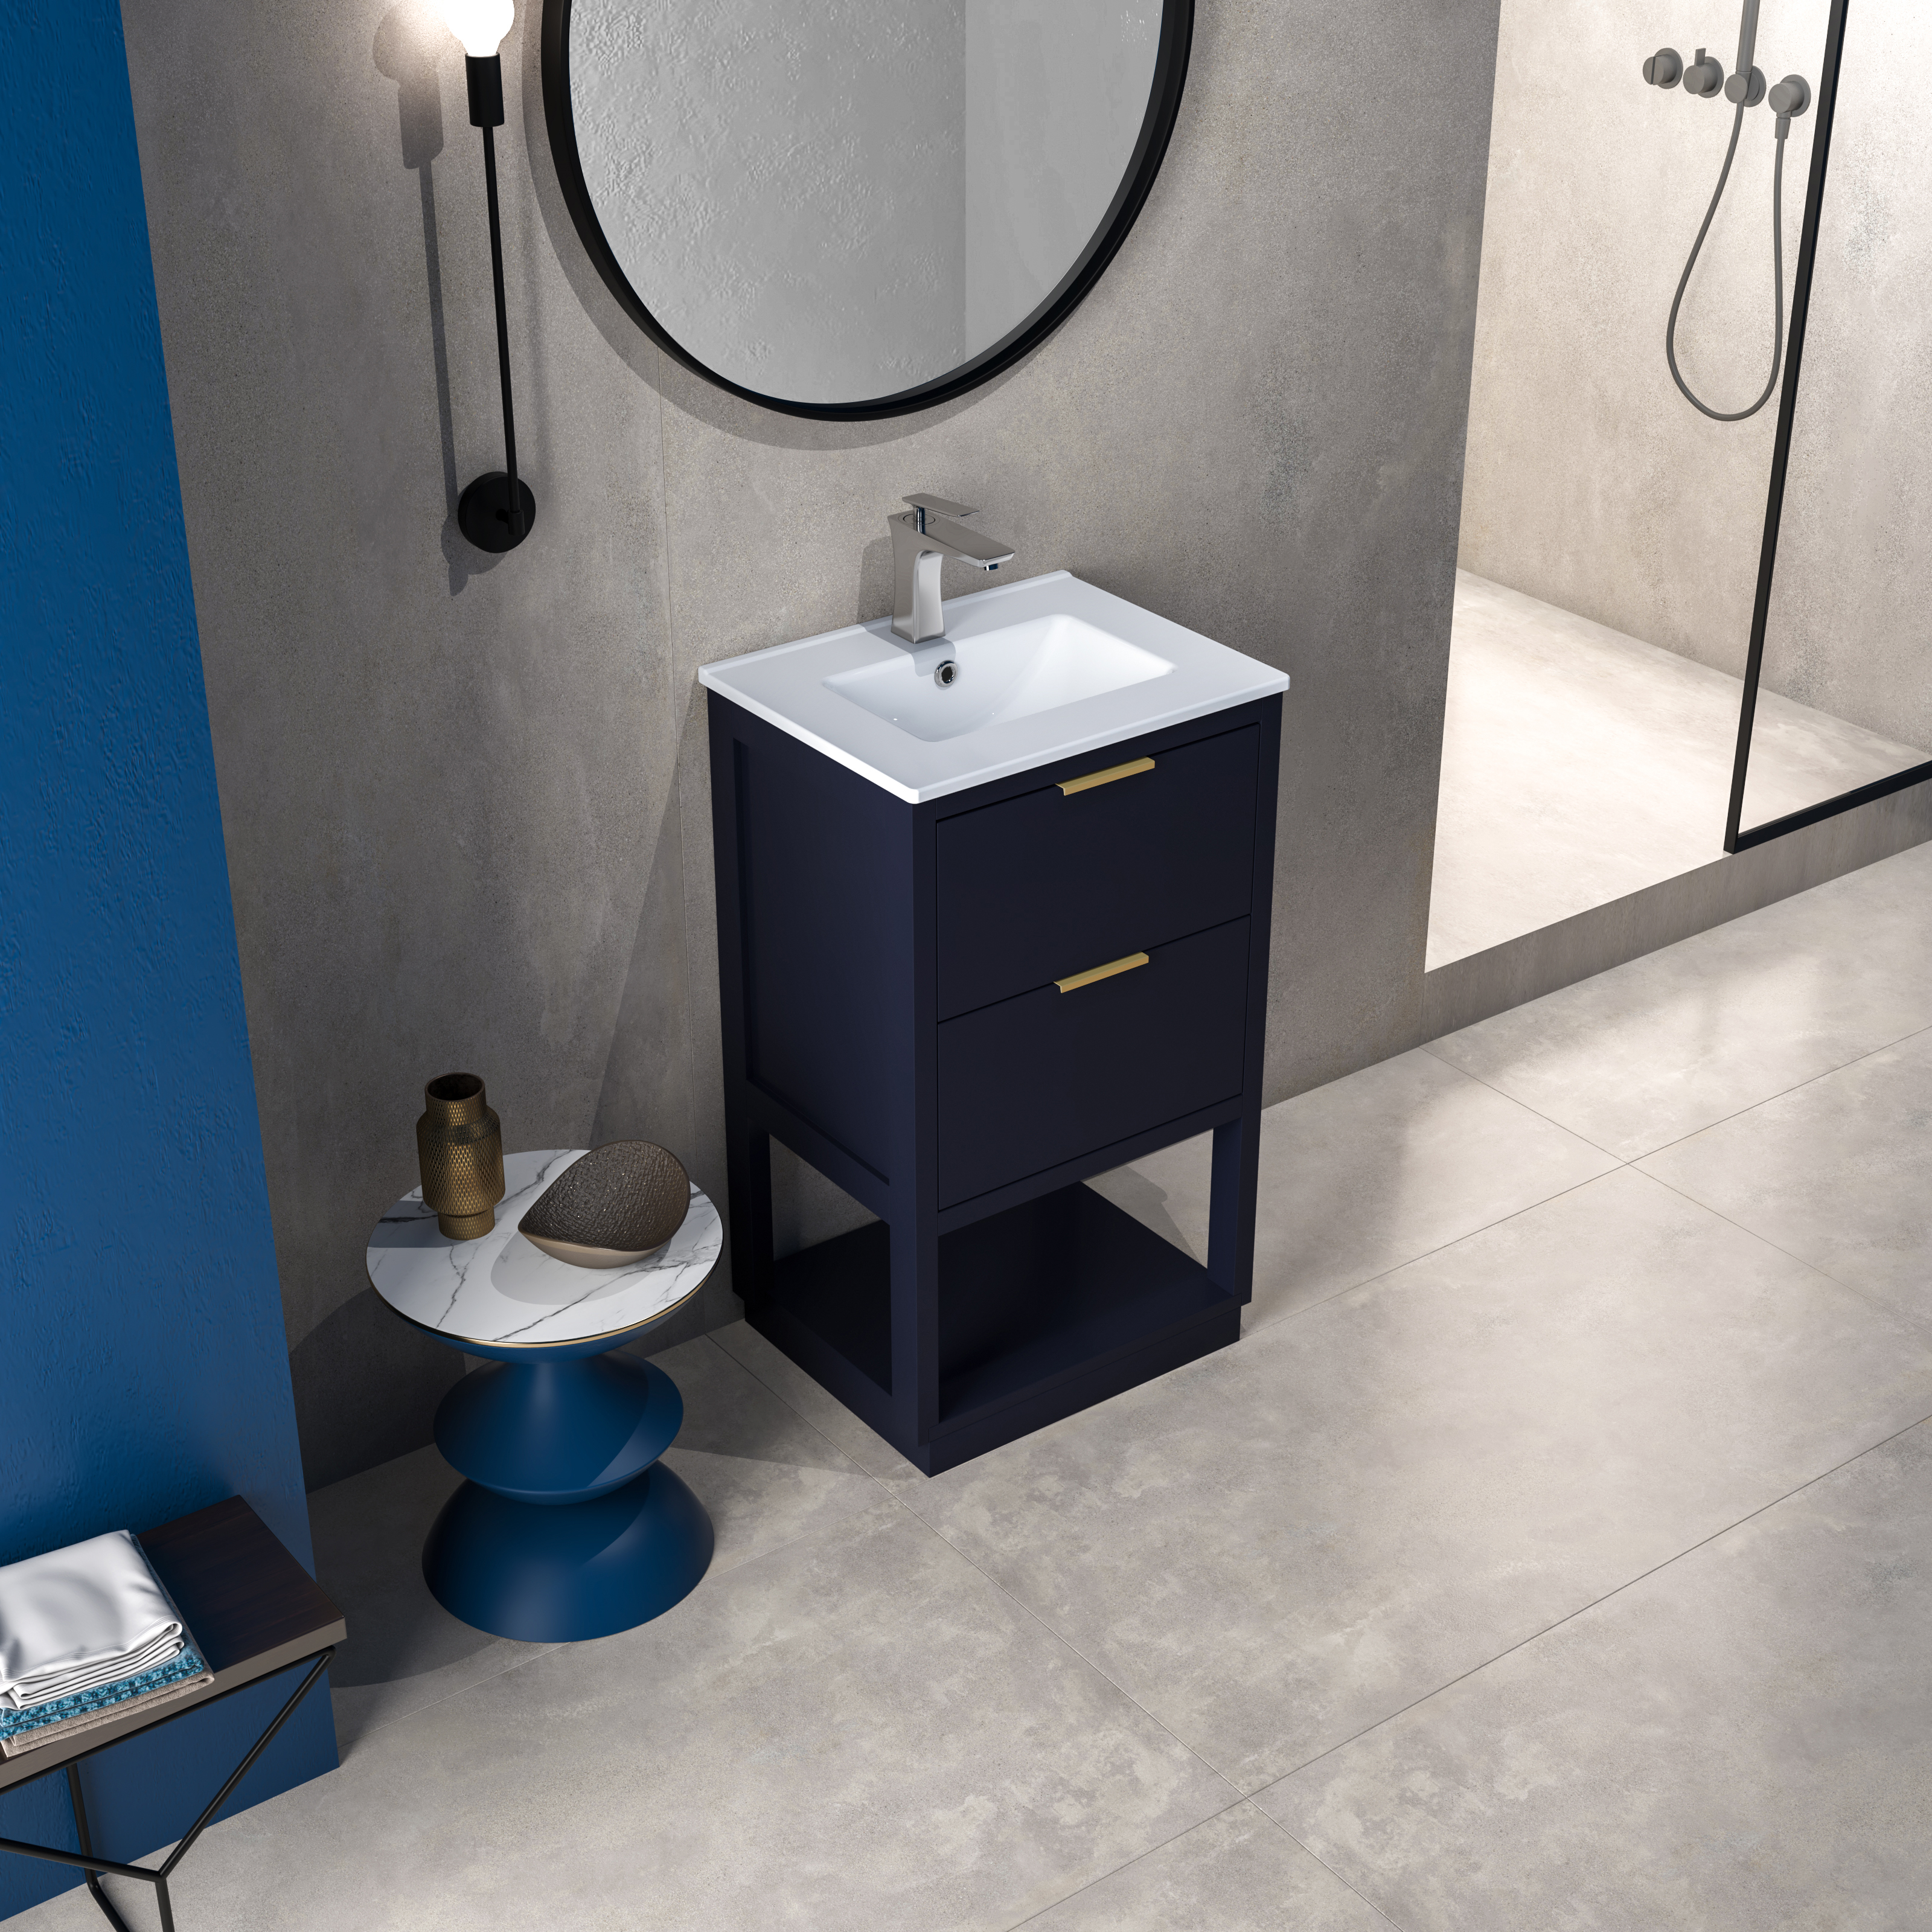 MEJE #S05A – 20 inch Single Sink Bathroom Vanity Set with Ceramic Undermount Vessel Sink for Small Space, Modern Storage Cabinet Set, Dark Blue